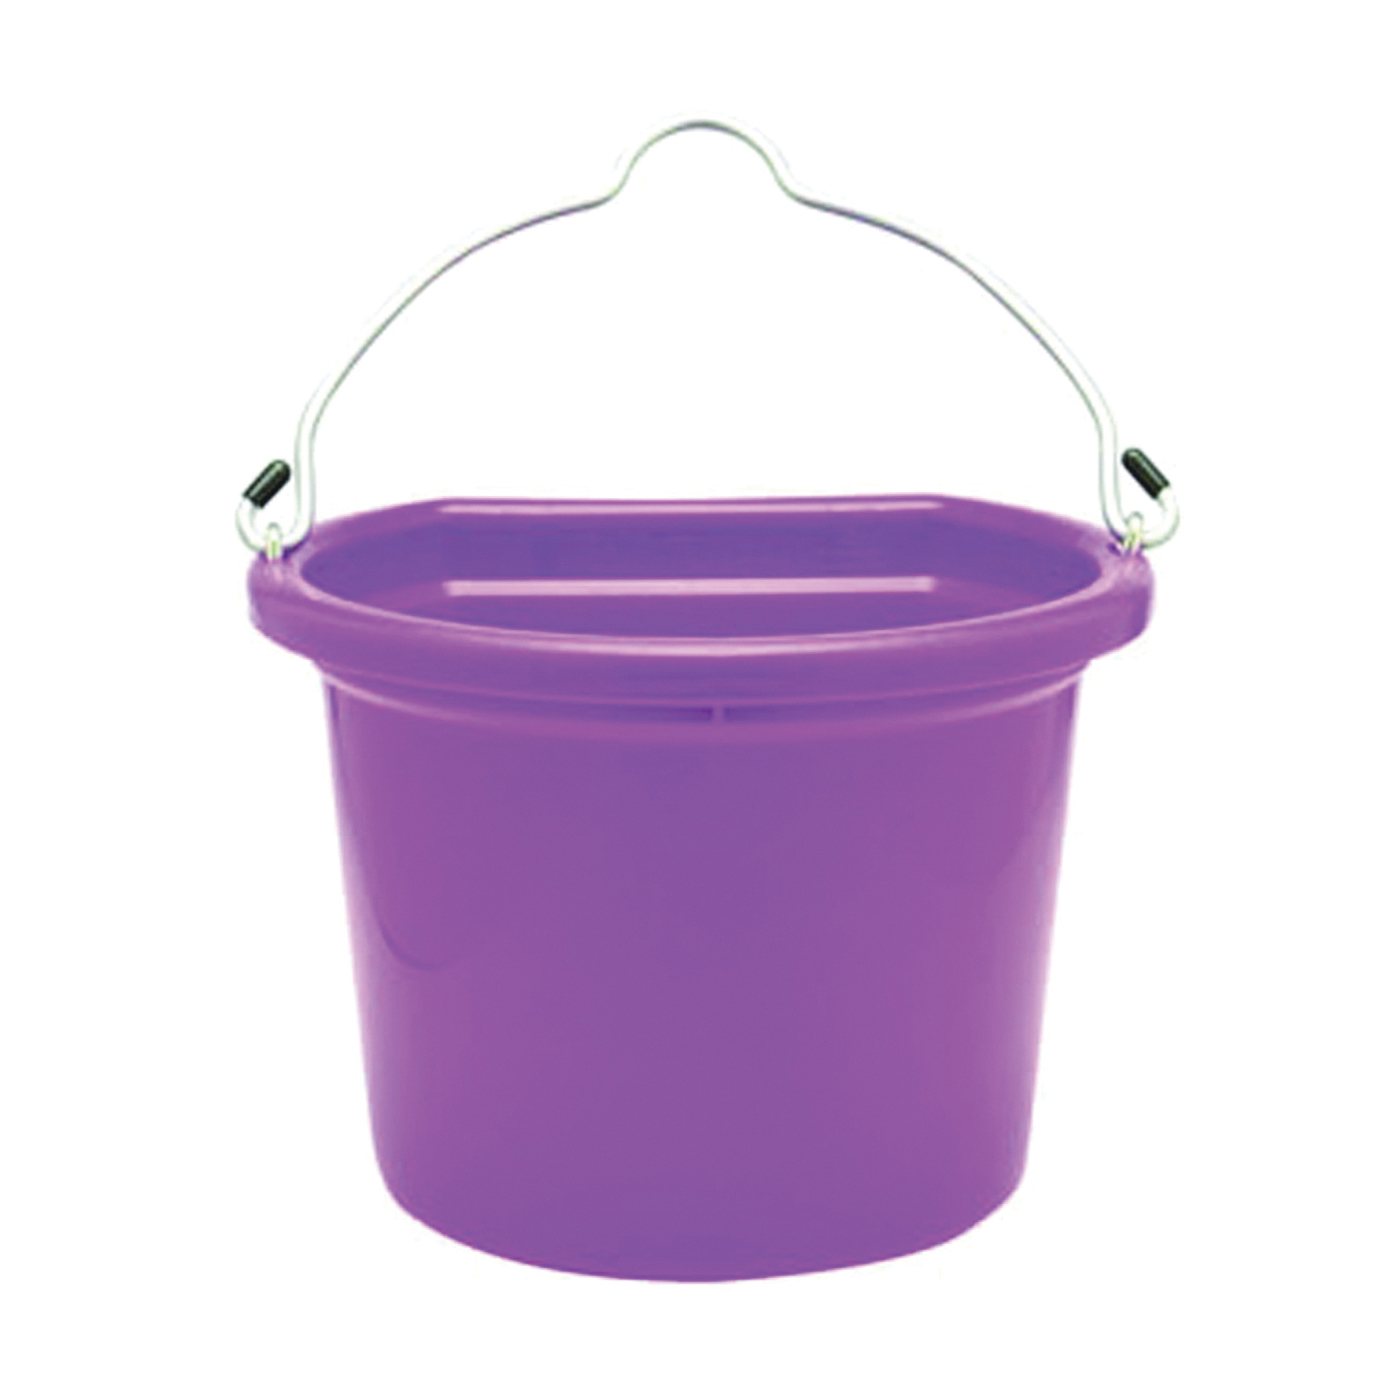 Fortex-Fortiflex 1301812 Bucket, 8 qt Volume, Polyethylene/Rubber, Hot Pink